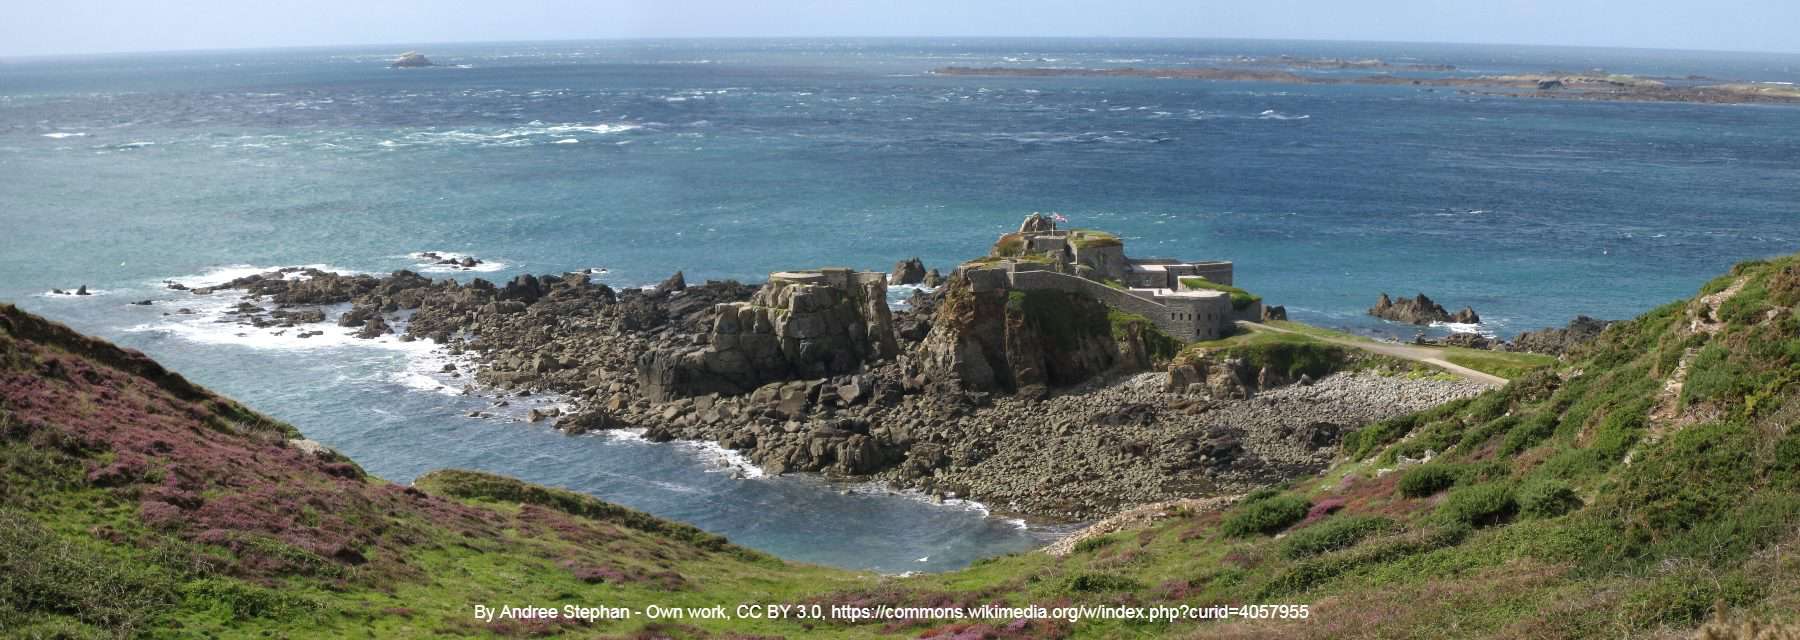 Alderney Fort Clonque credited in photo